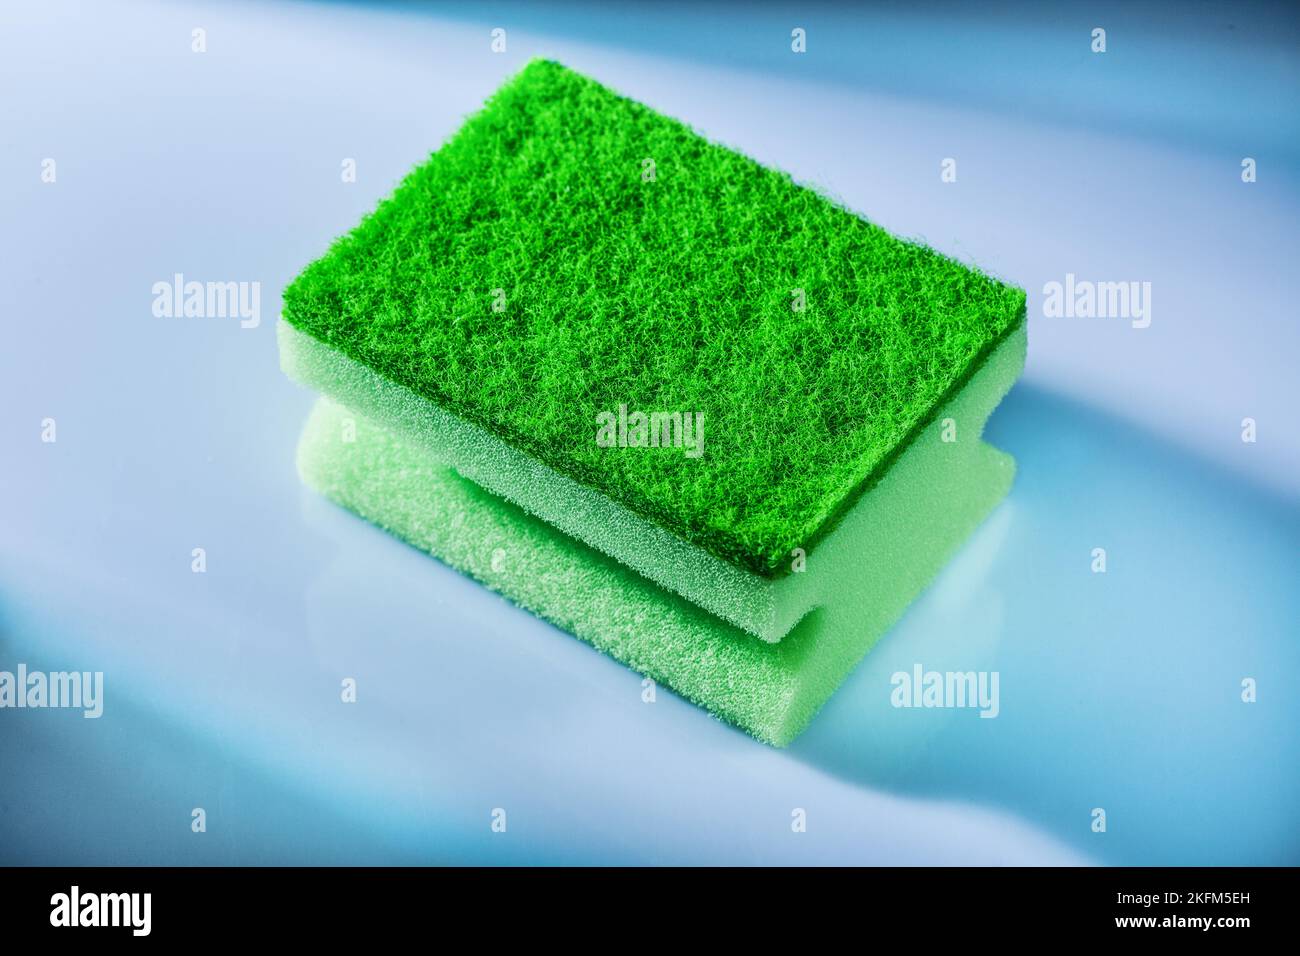 Green sponge on white background. Stock Photo